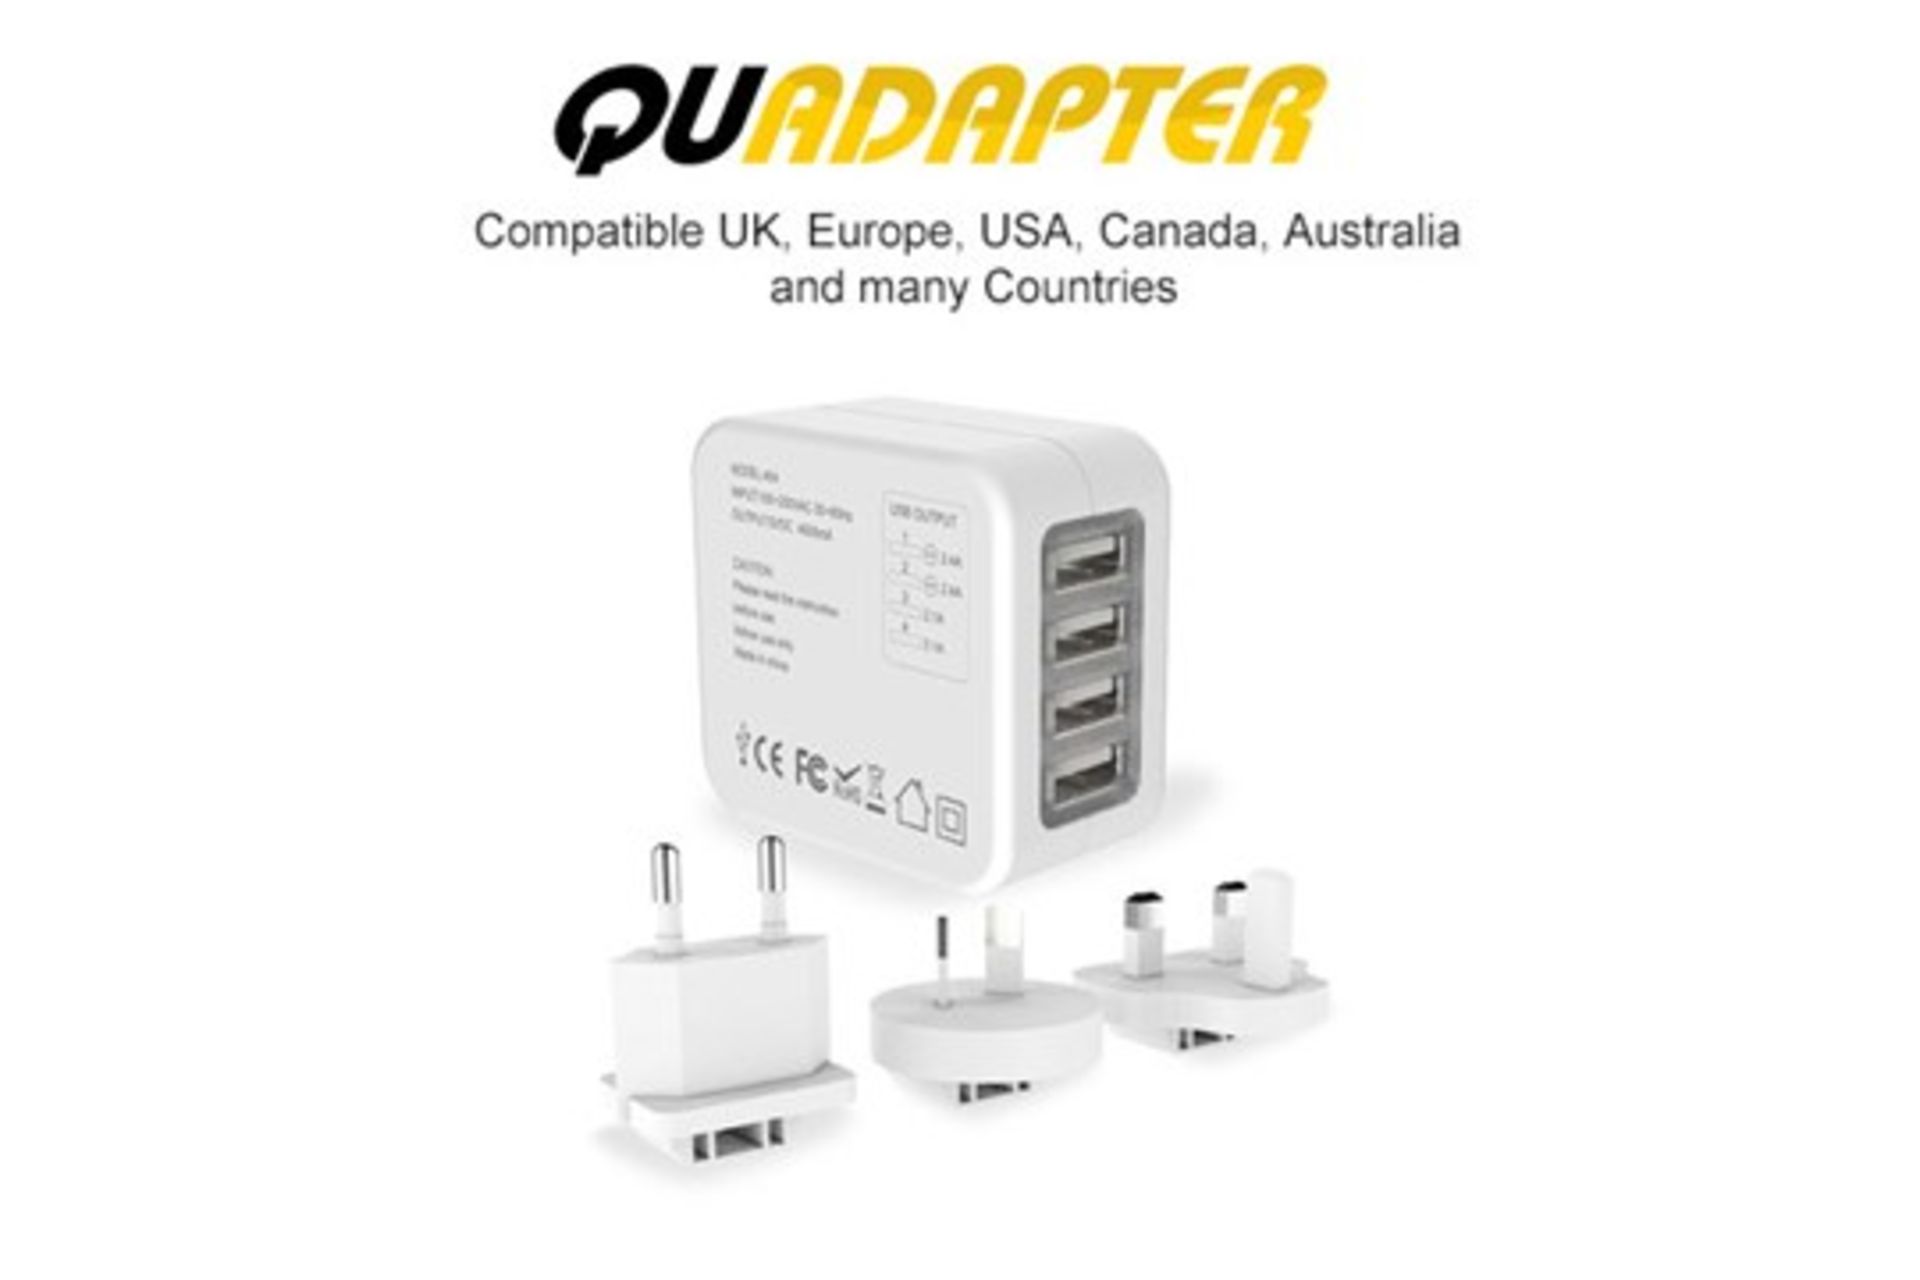 50x Quadapter - The Worldwide Universal Travel Adapter! 4 USB Ports - Image 9 of 12